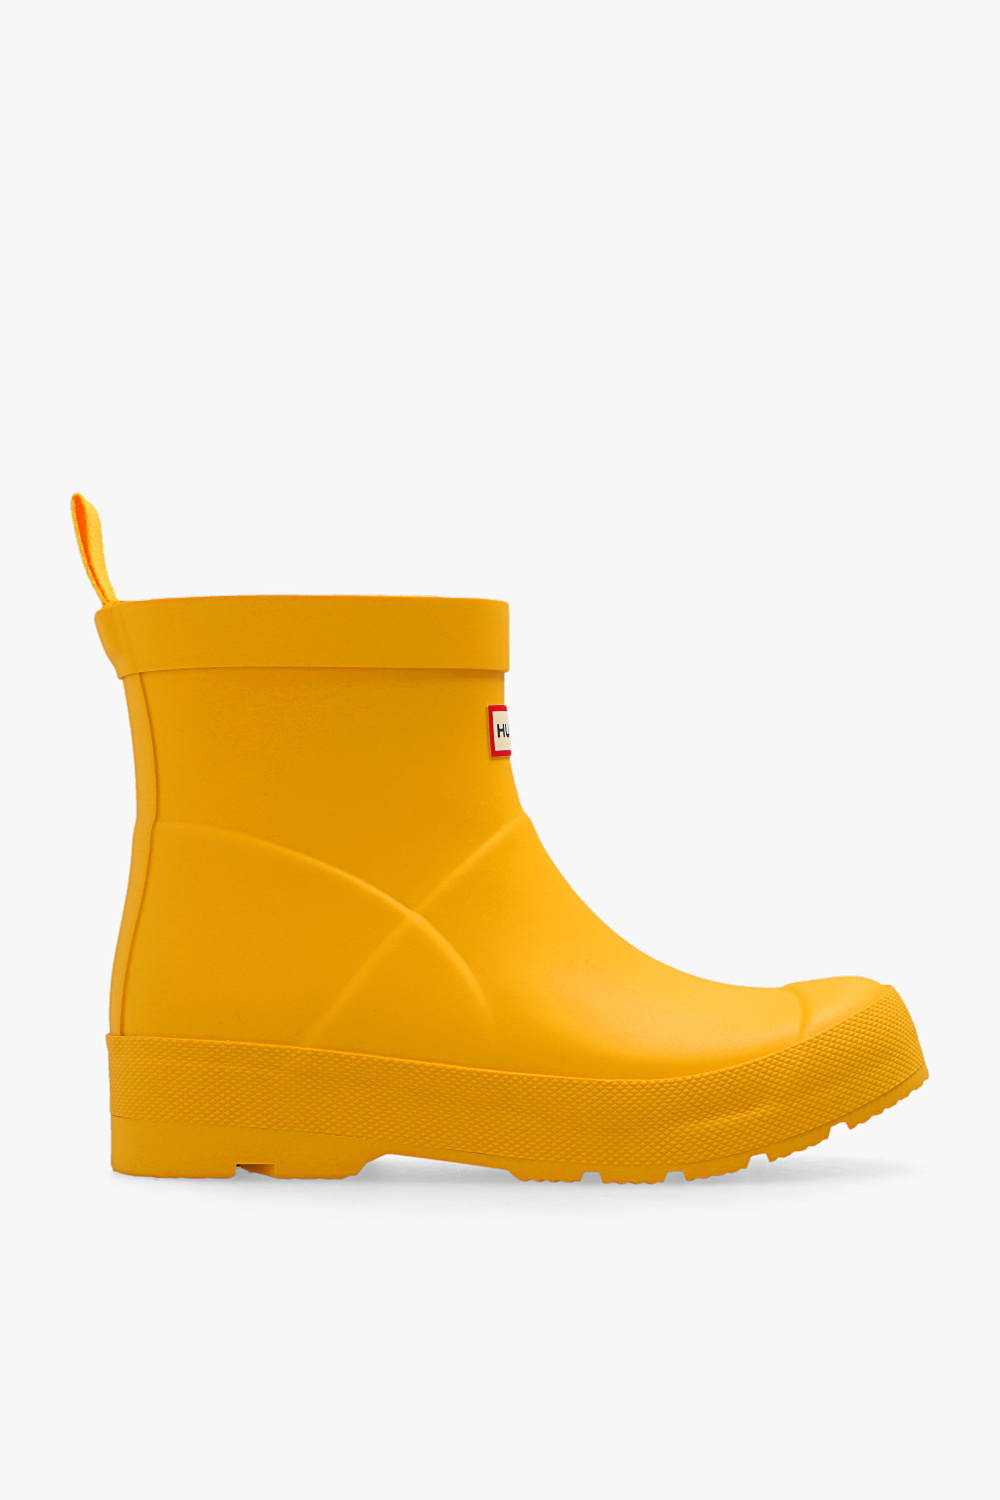 Hunter Kids ‘Play’ rain boots